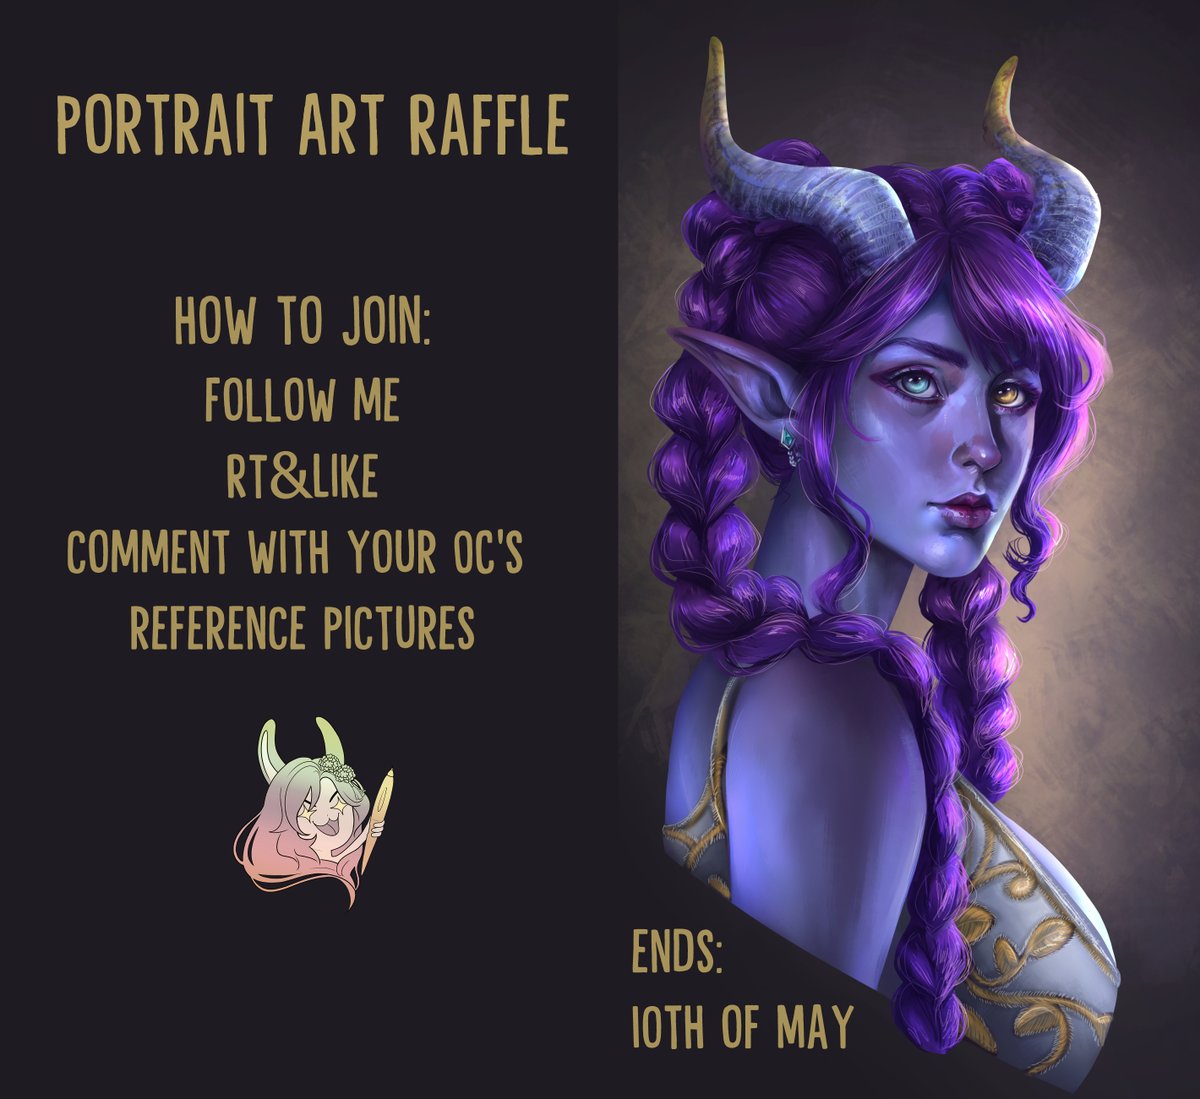 Portrait art raffle!
Follow
RT&Like
Comment with your OC's pictures !

#artgiveaway #artraffle #raffle #characterportrait